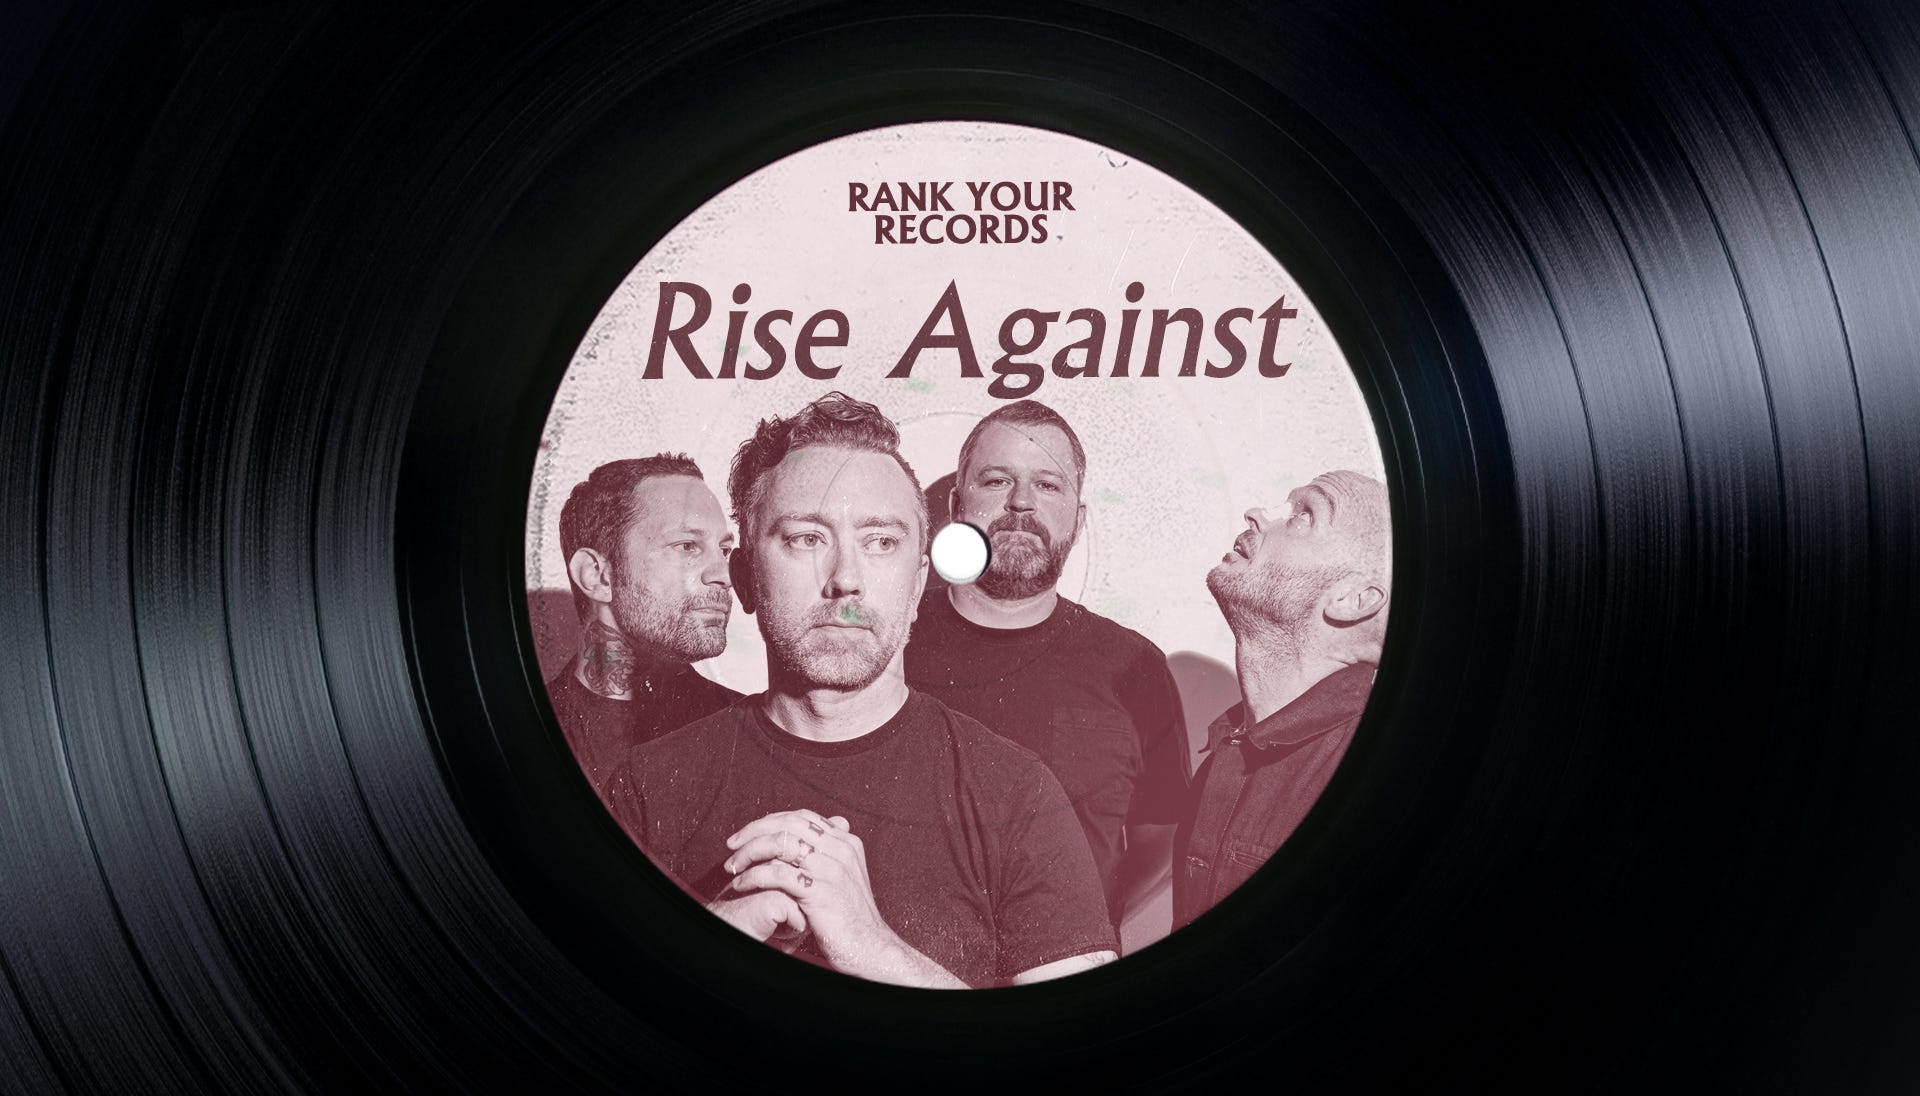 Rise Against - Chicago Punk Rockers